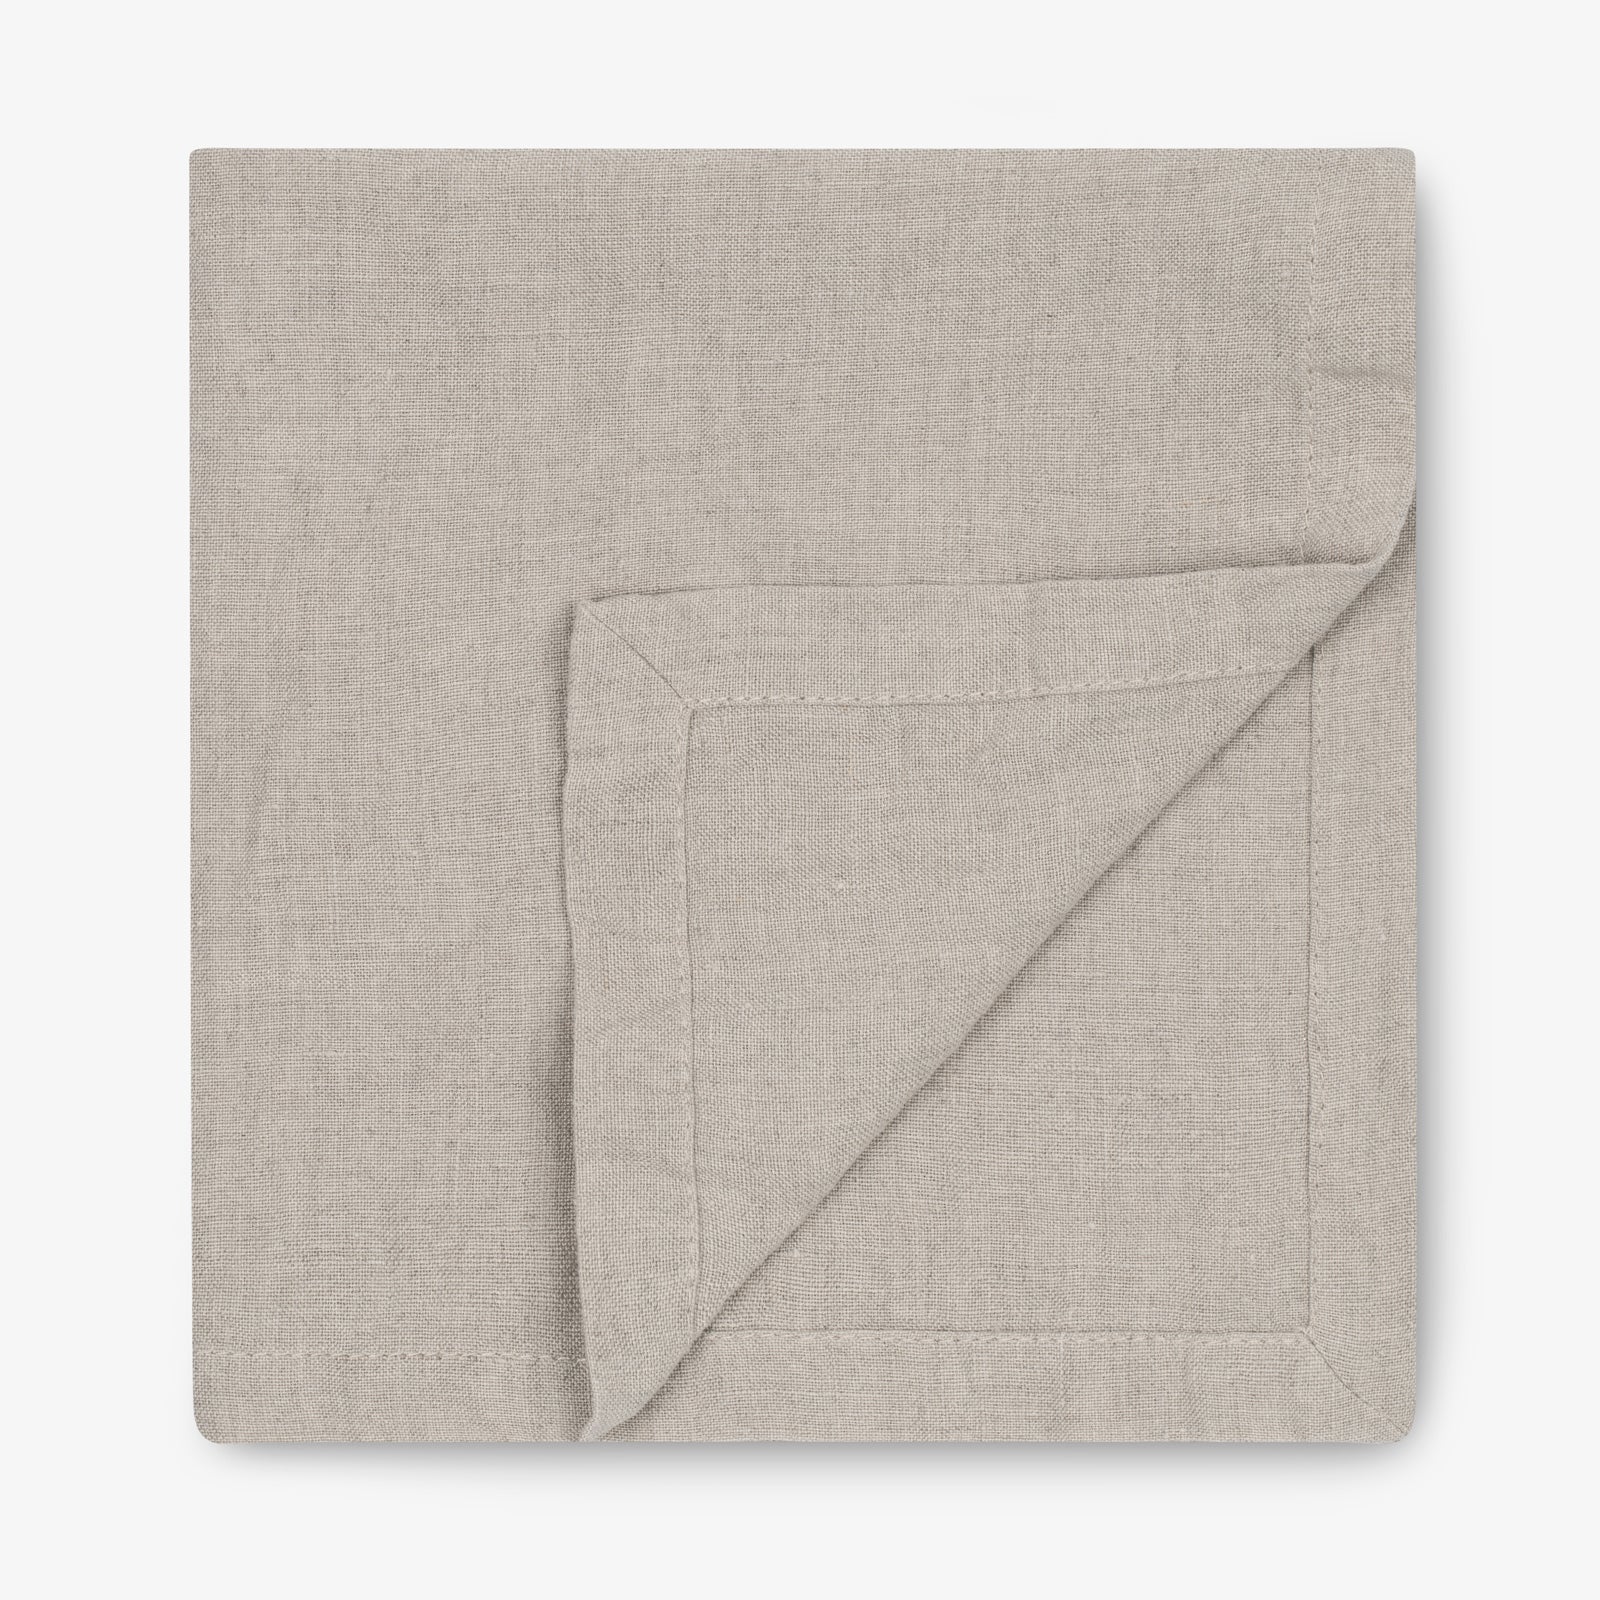 Handmade napkin